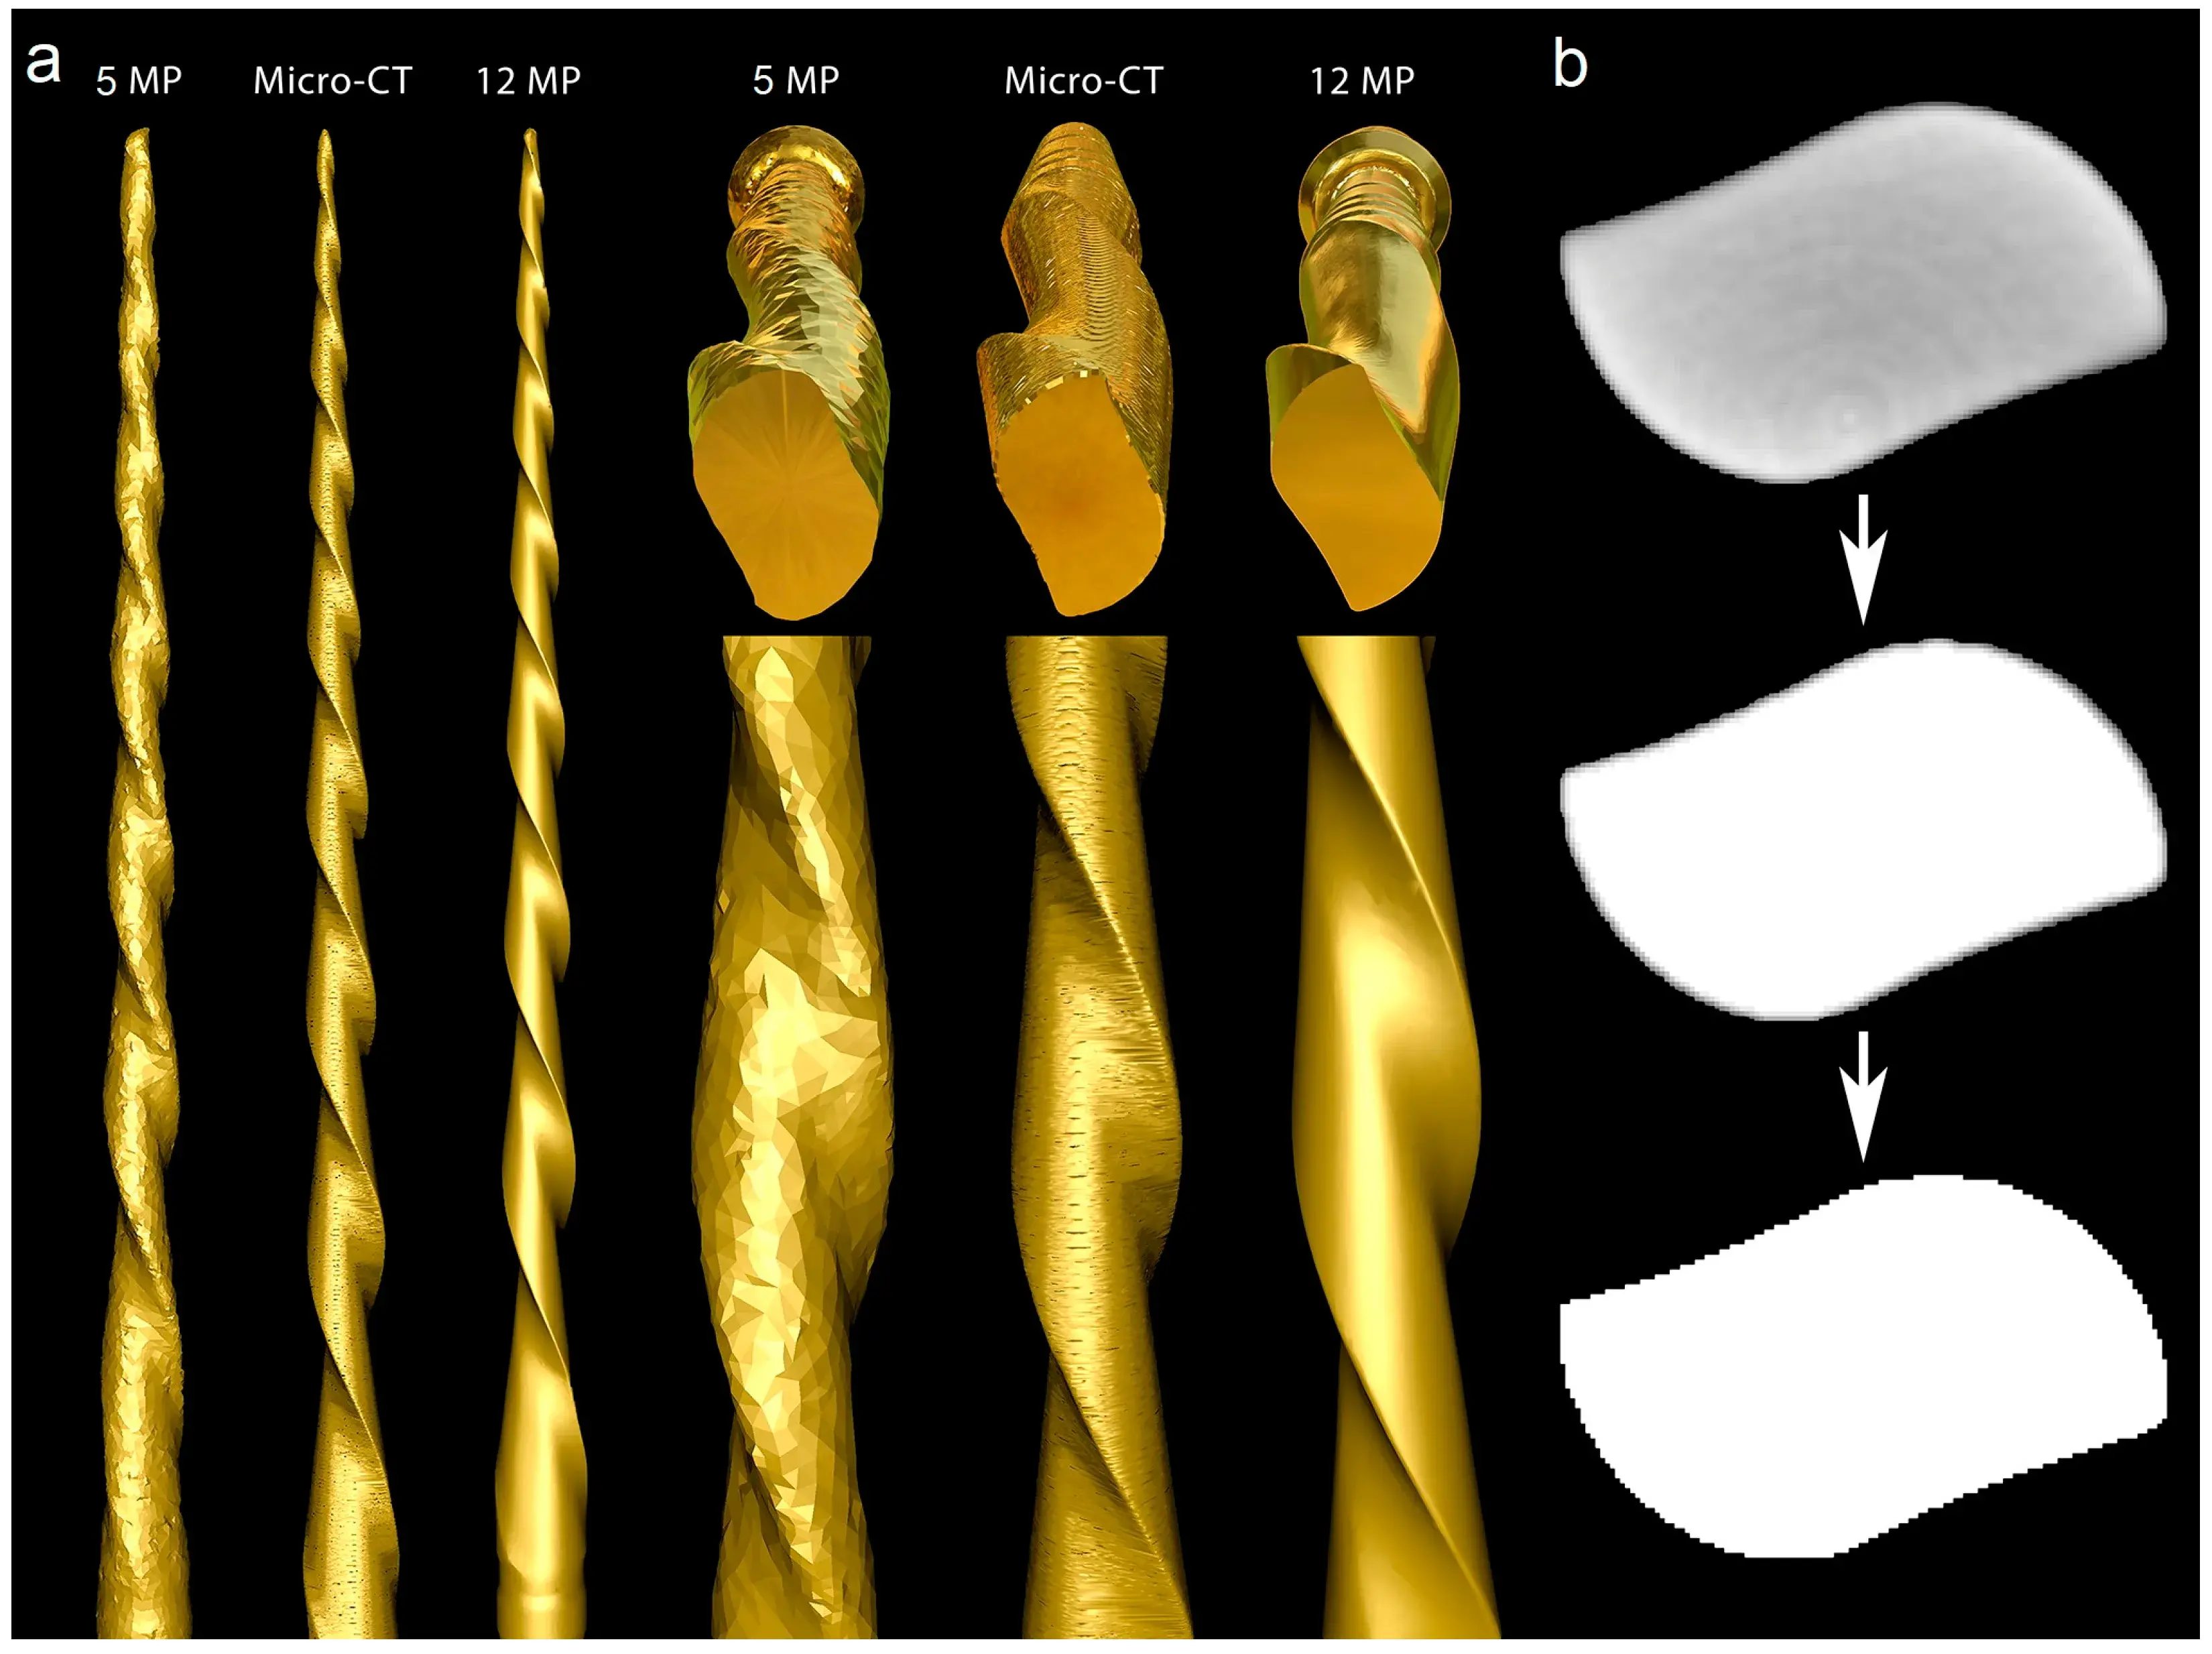 Endodontic instruments surfaces